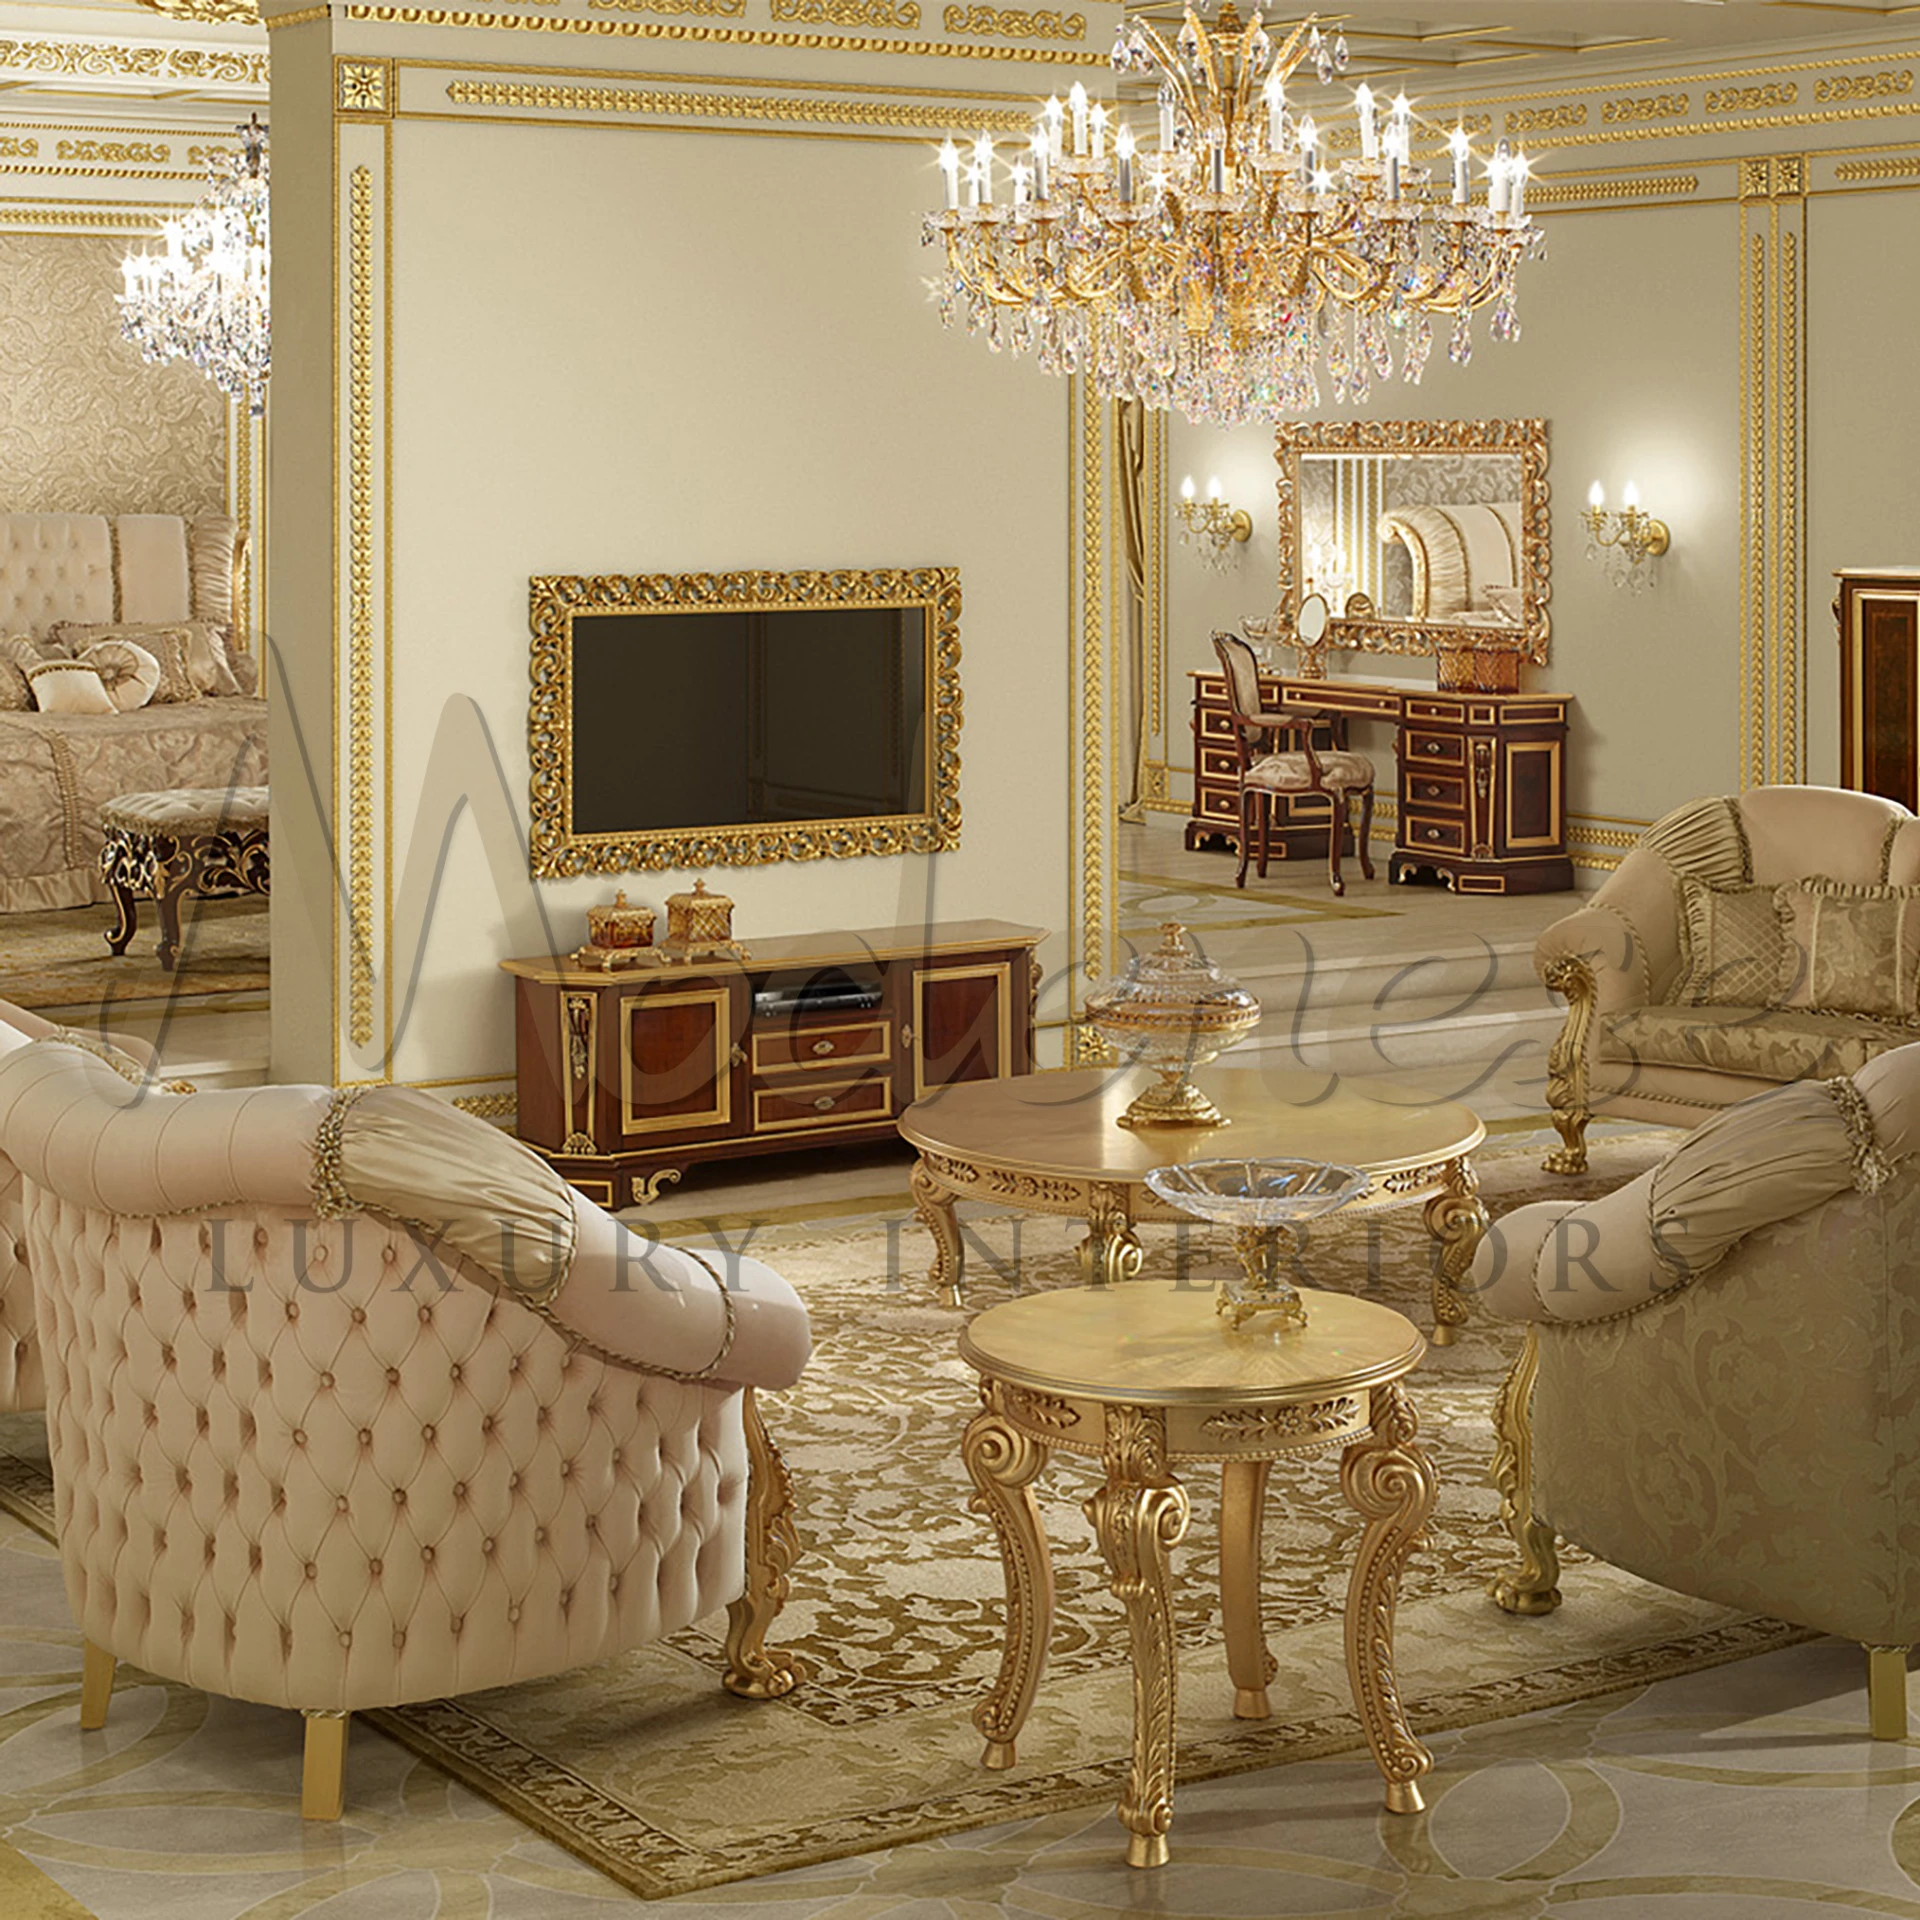 Royal Gilded Armchair: A Symbol of Prestige and Grandeur